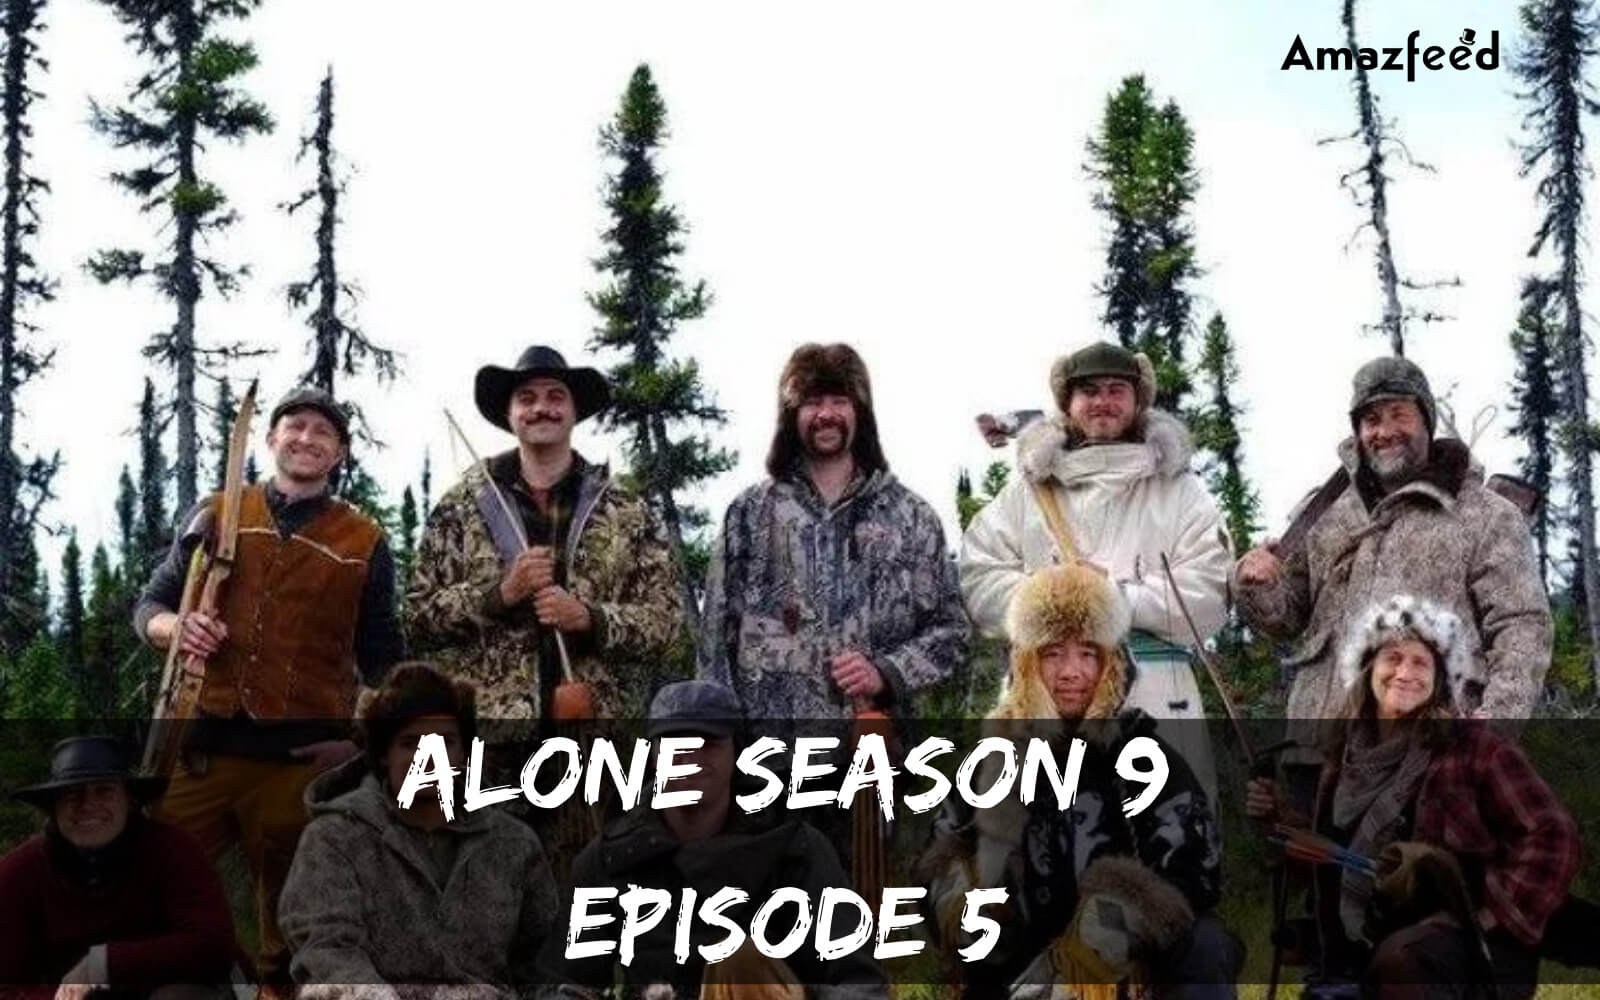 Alone Season 9 Episode 5 release date